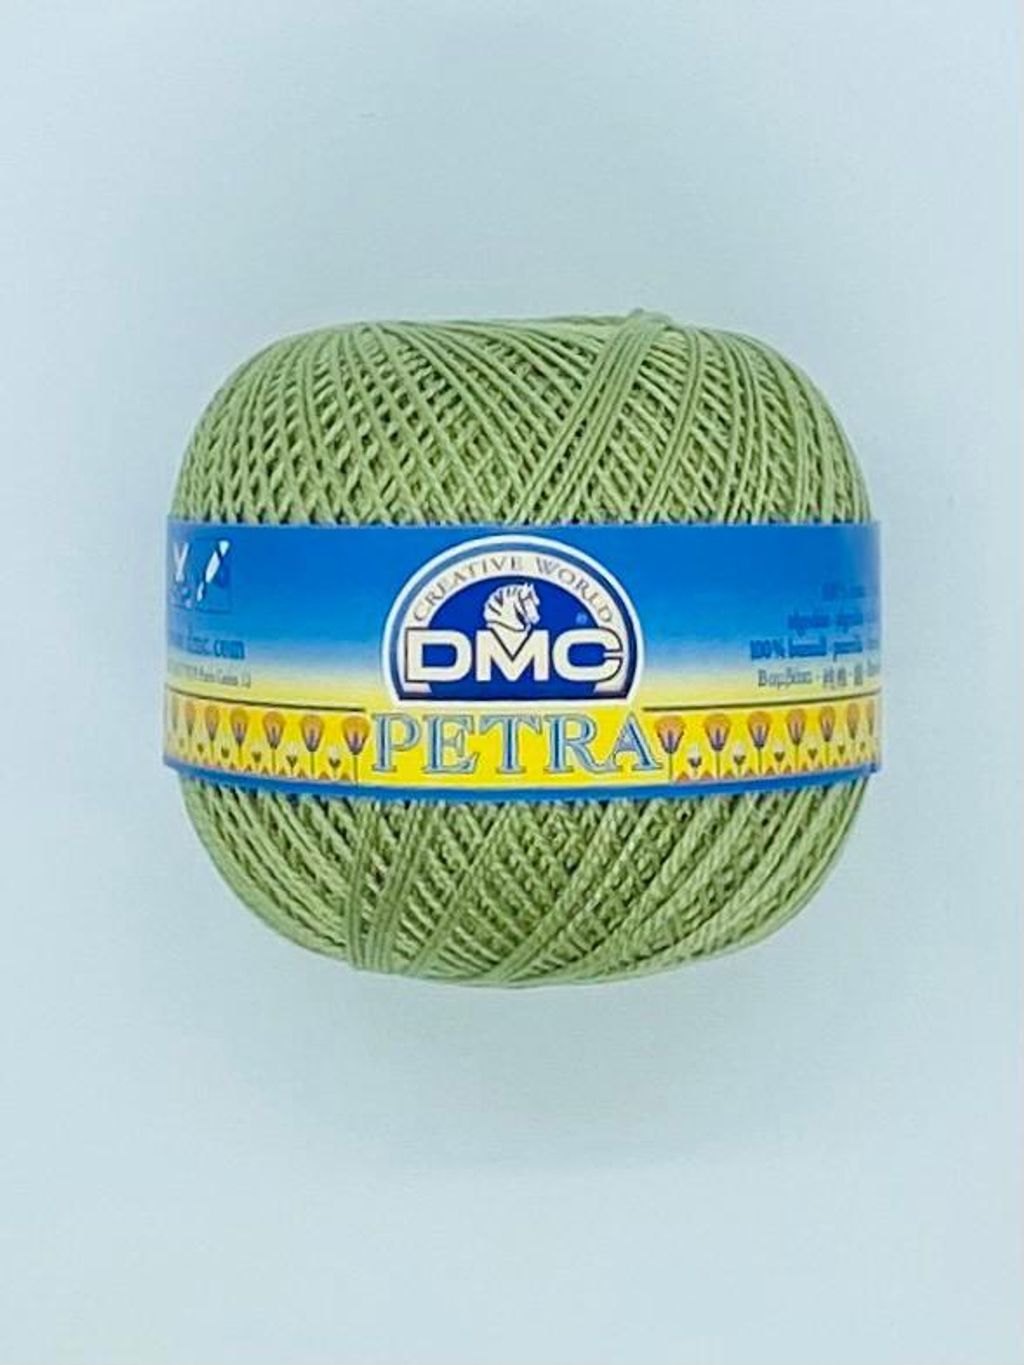 Free Crochet Patterns that Use a 9mm Crochet Hook